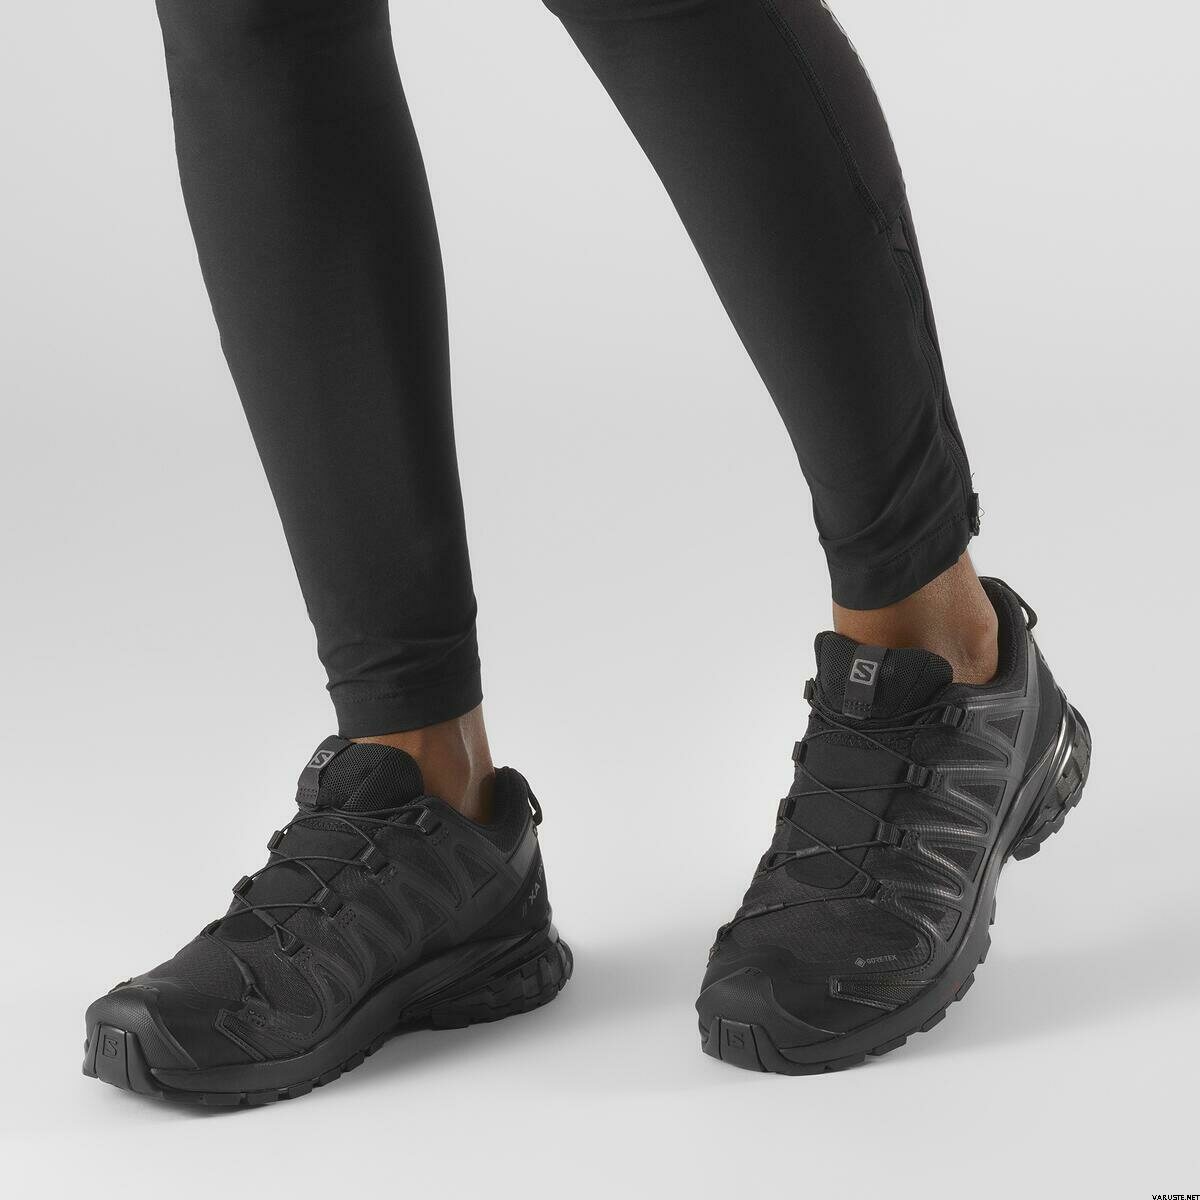 Salomon XA PRO 3D v8 GTX Womens | Outdoor shoes - women's | Varuste.net ...